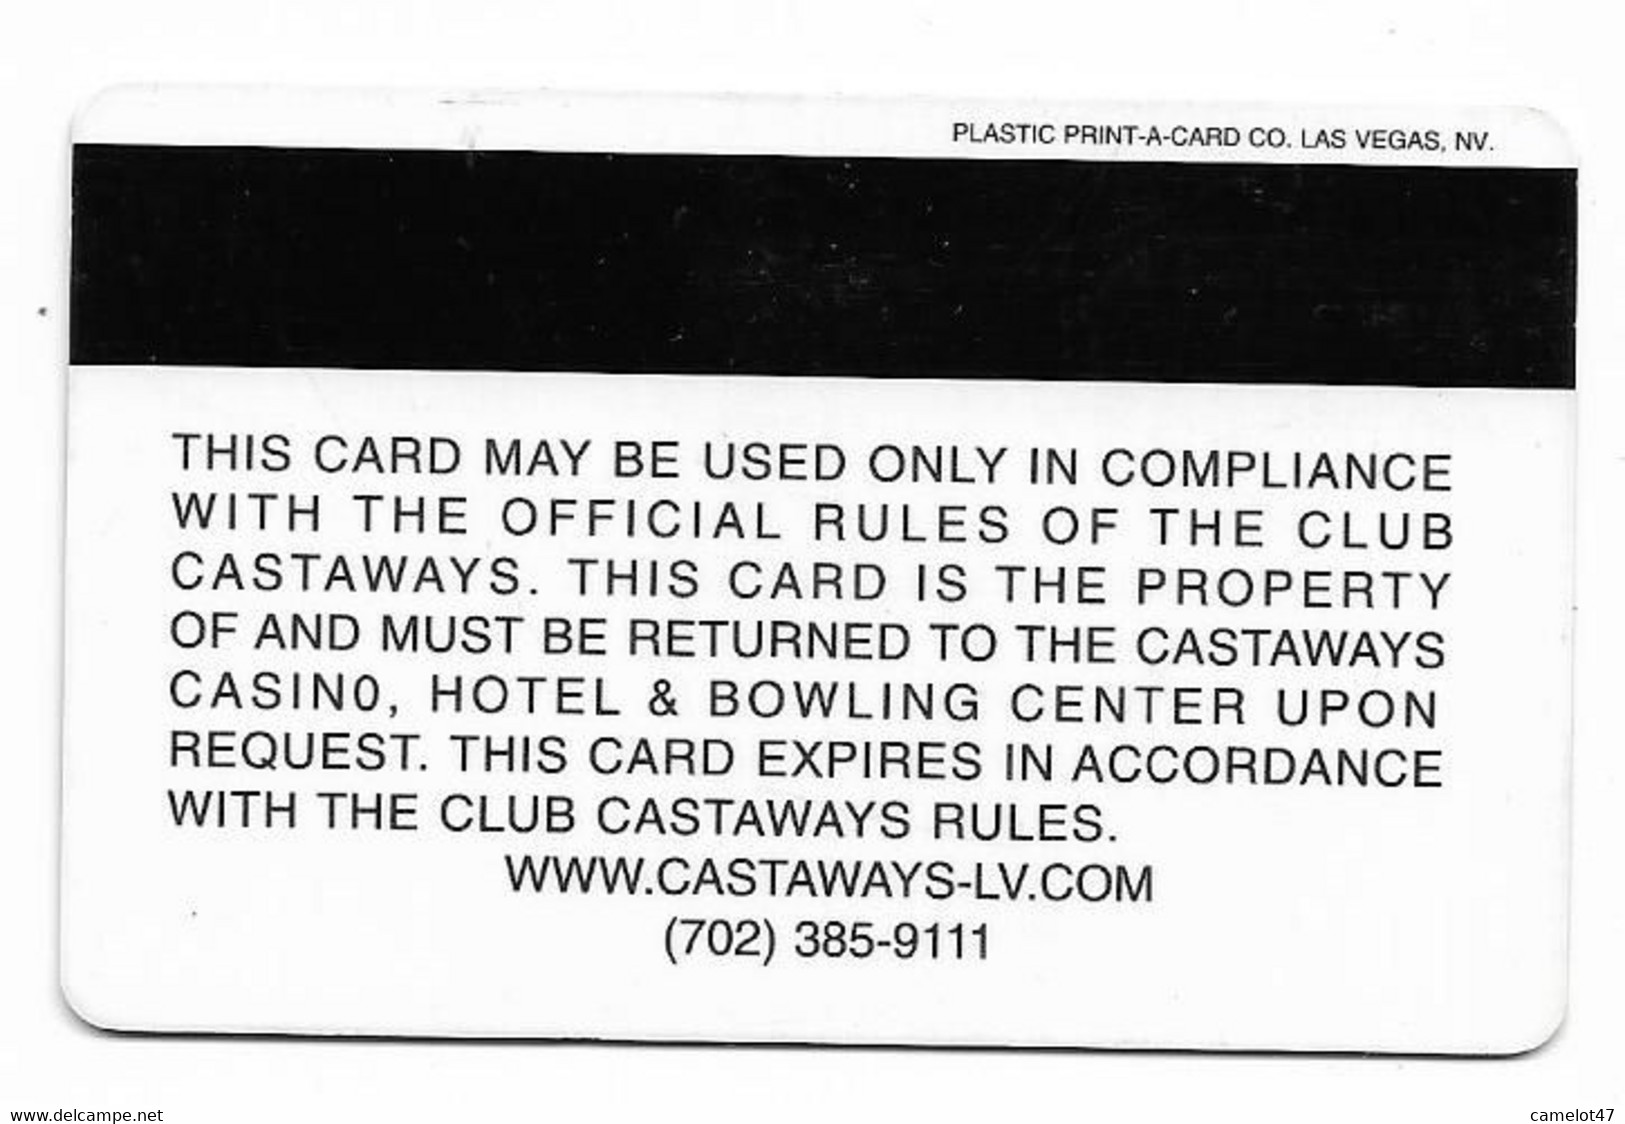 Castaways Casino, Las Vegas, Older Used Slot Or Player's Card,  # Castaways-2 - Casino Cards